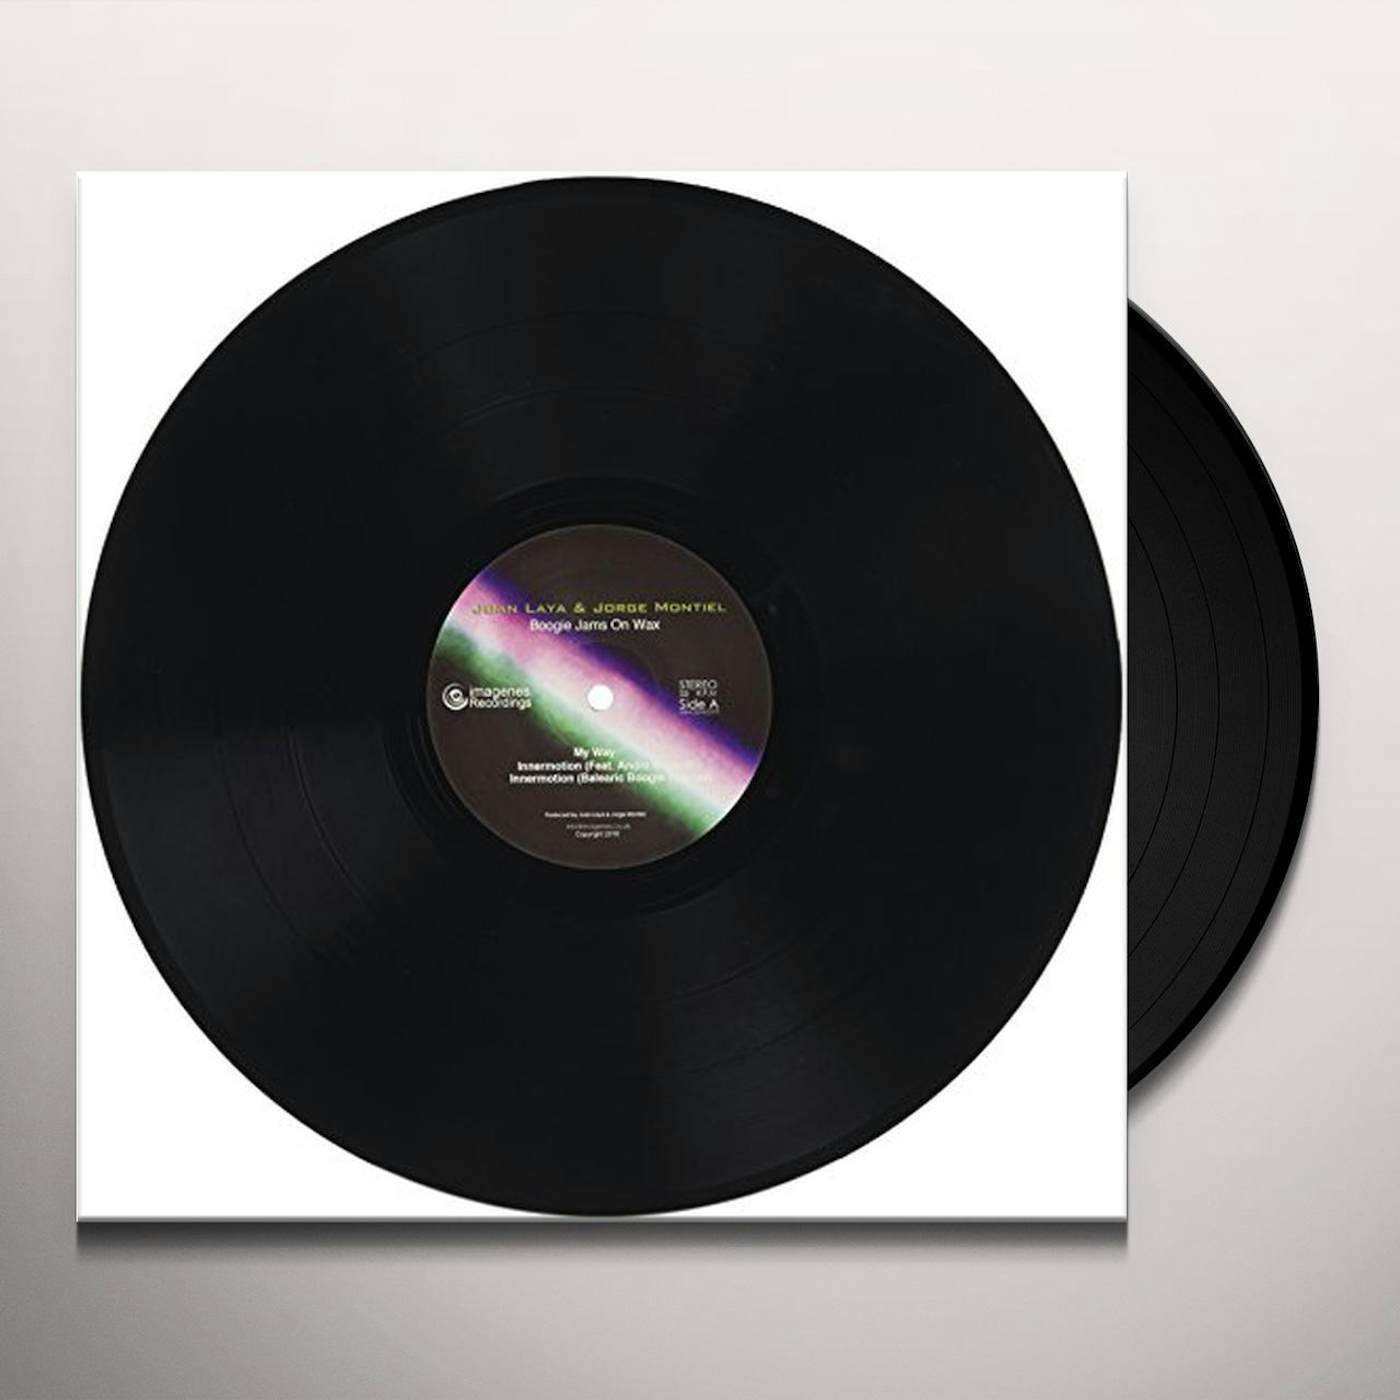 Juan Laya & Jorge Montiel BOOGIE JAMS ON WAX Vinyl Record